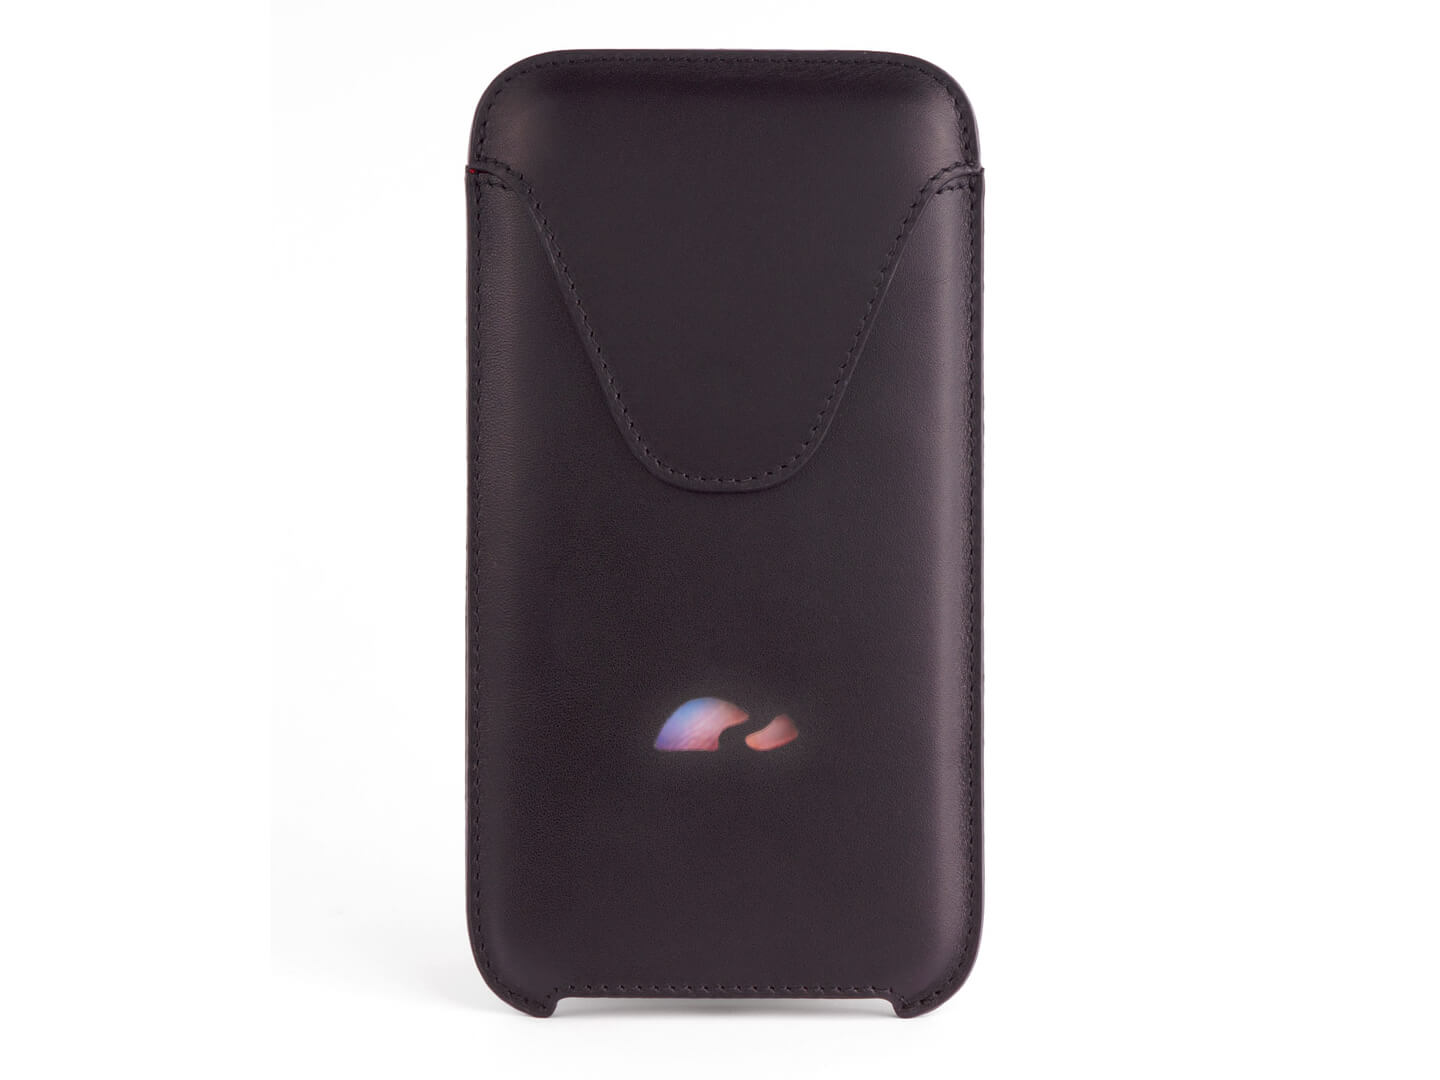 iPhone 6 / 7 / 8 Plus Leather sleeve case black - Carapaz